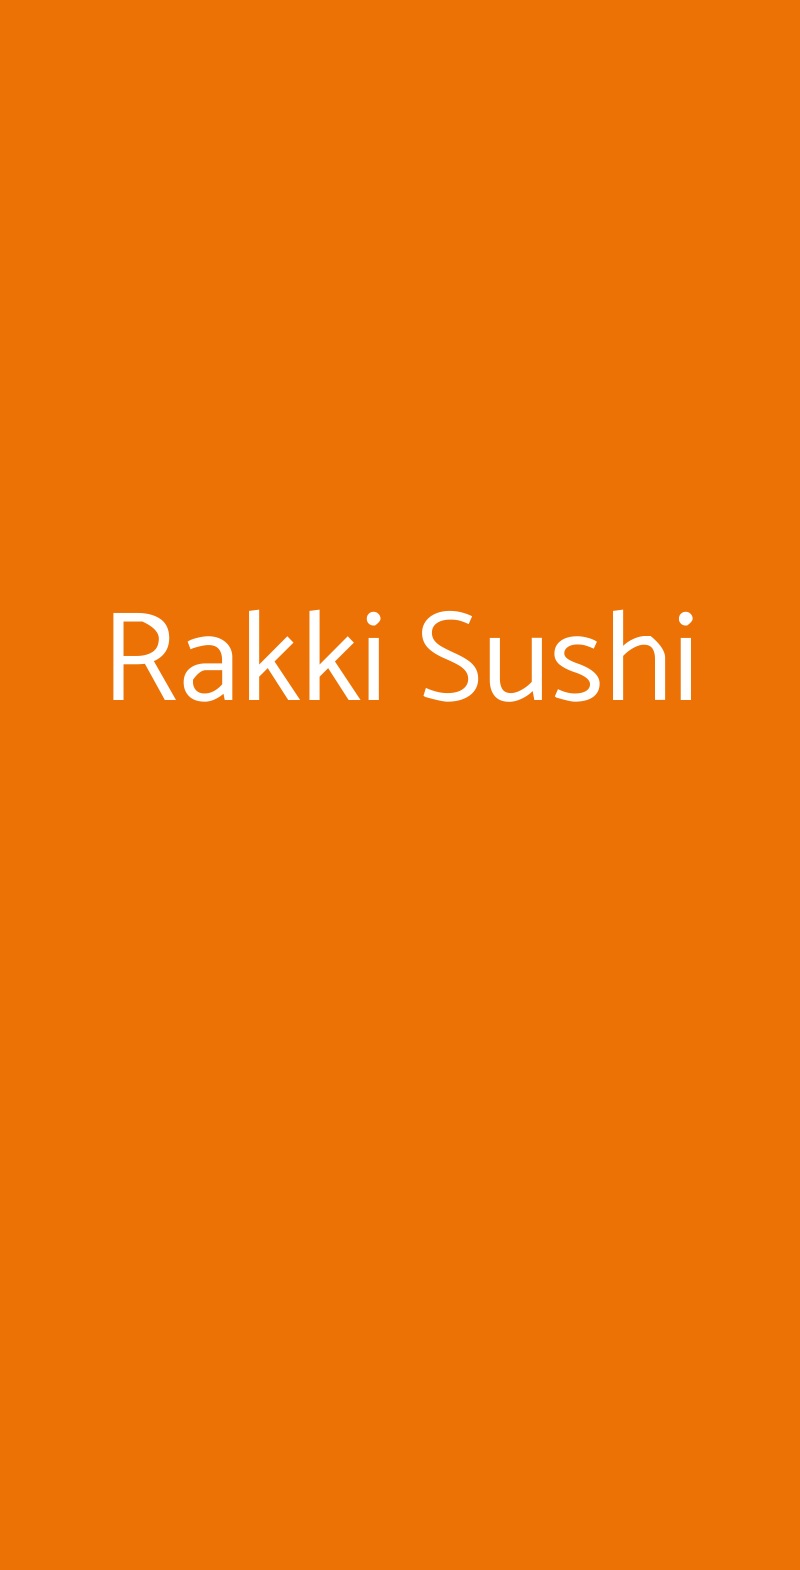 Rakki Sushi Milano menù 1 pagina